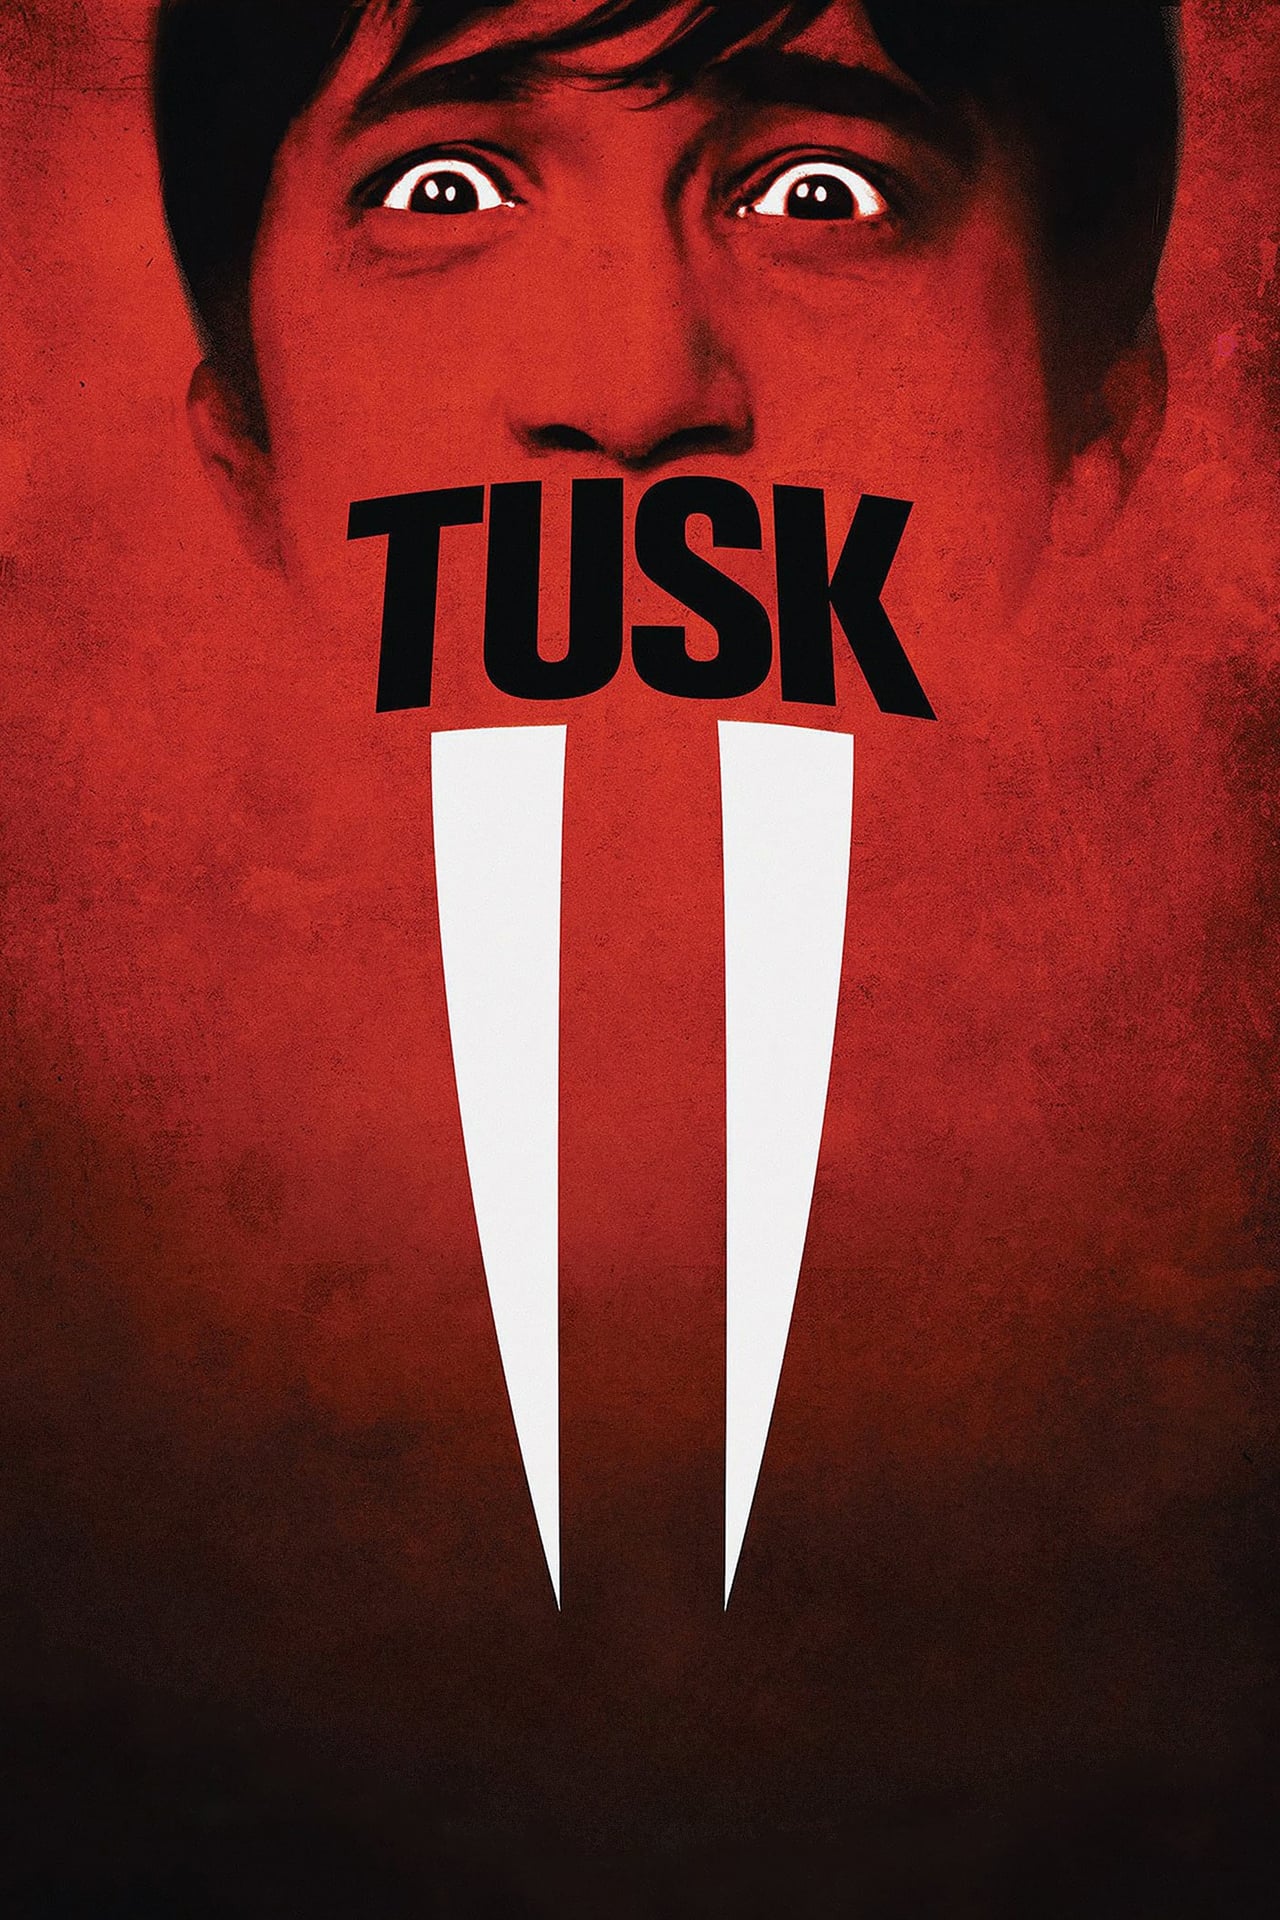 The Tusk